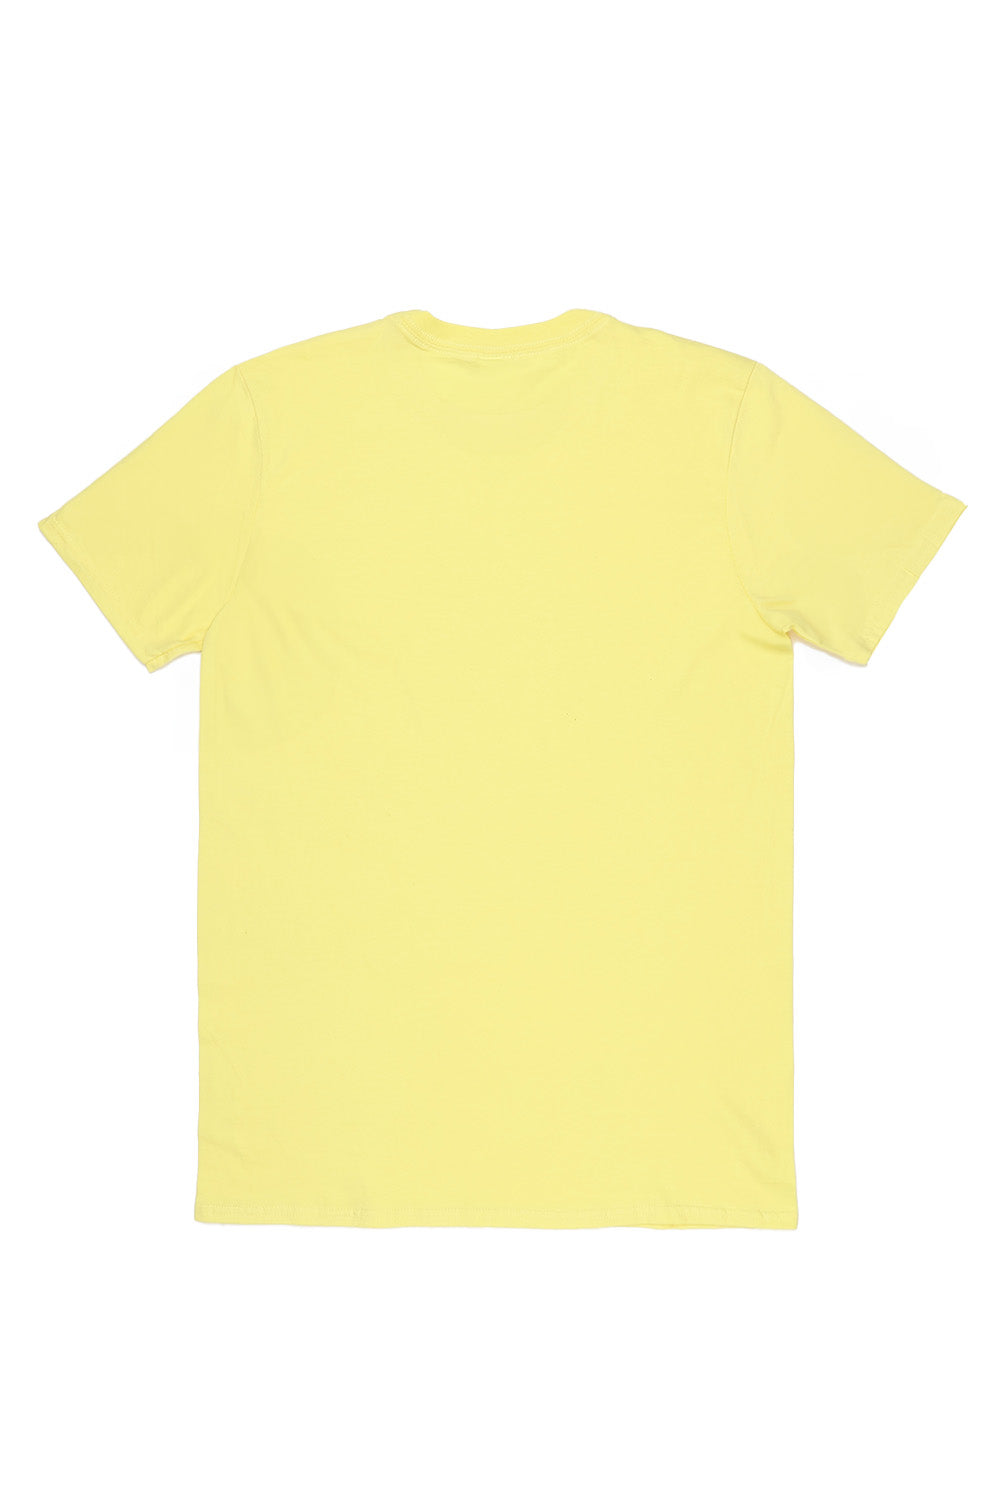 Los Angeles T-Shirt in Yellow (Custom Packs)